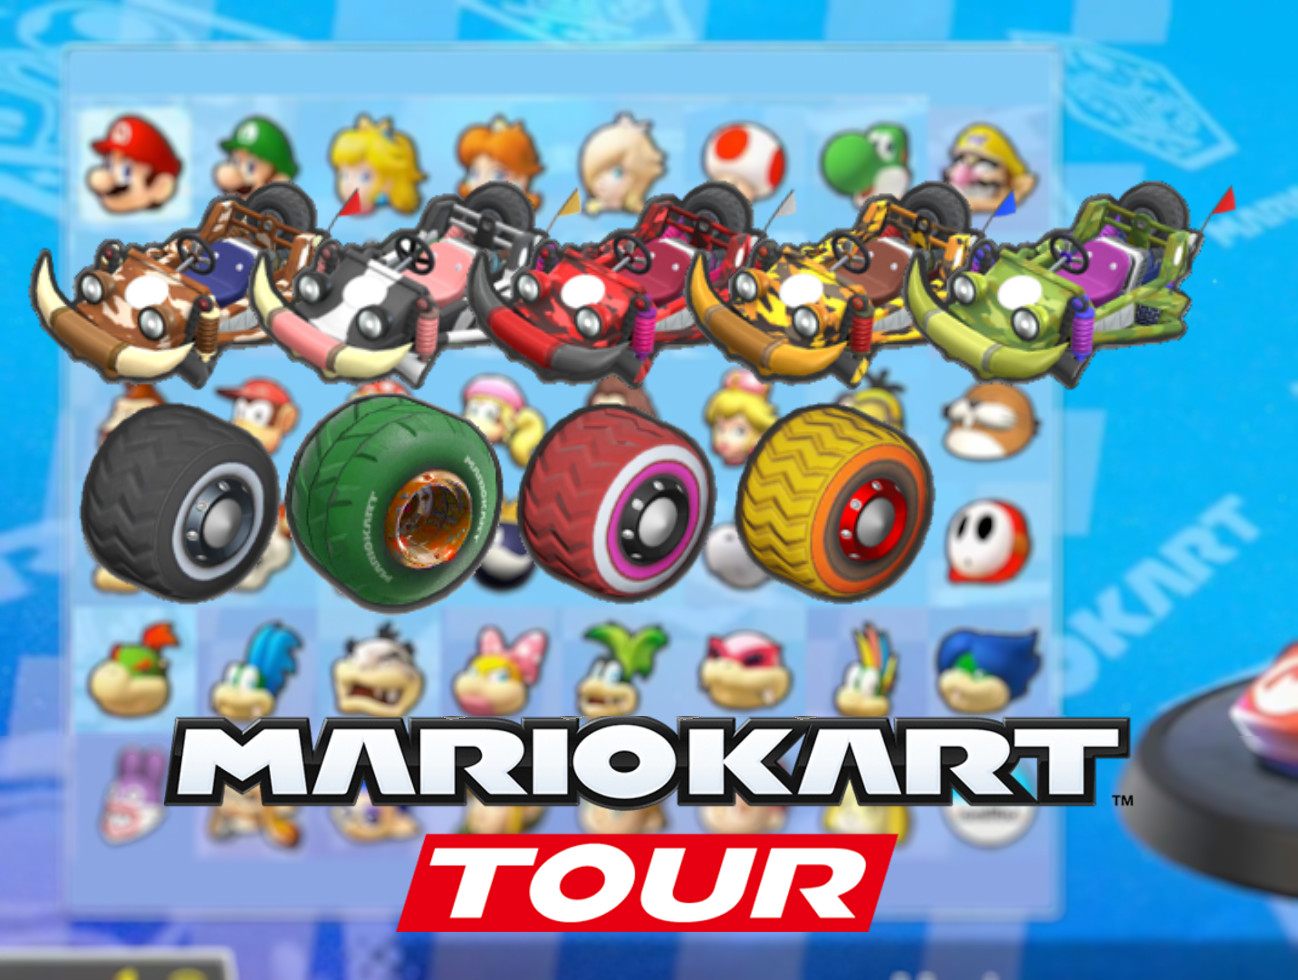 Mario Kart tour Mod Apk